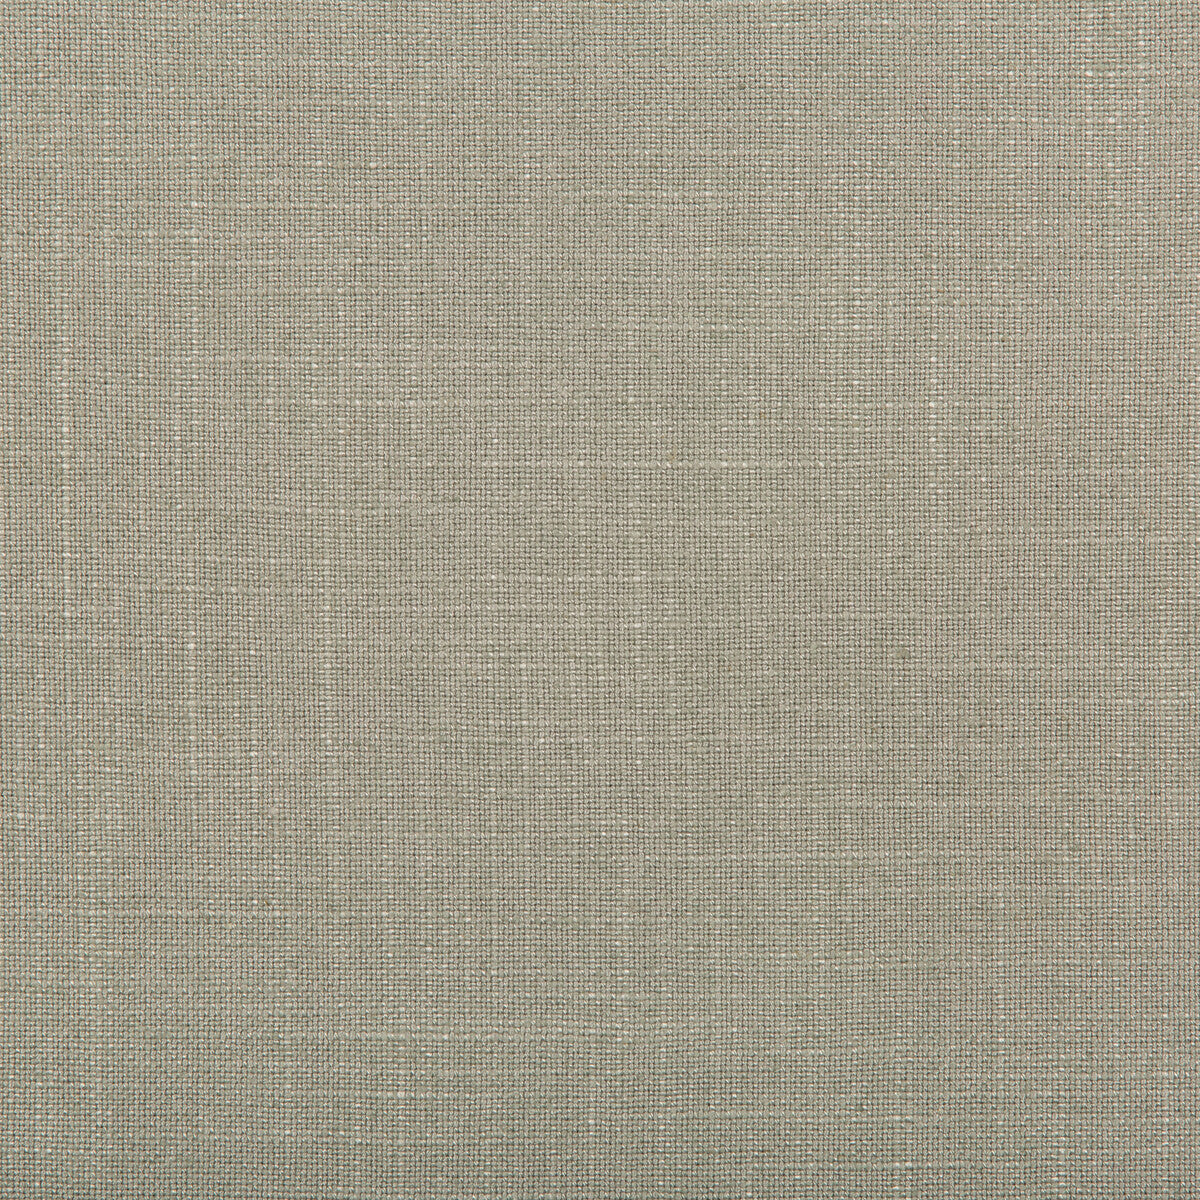 Aura fabric in sterling color - pattern 35520.121.0 - by Kravet Design